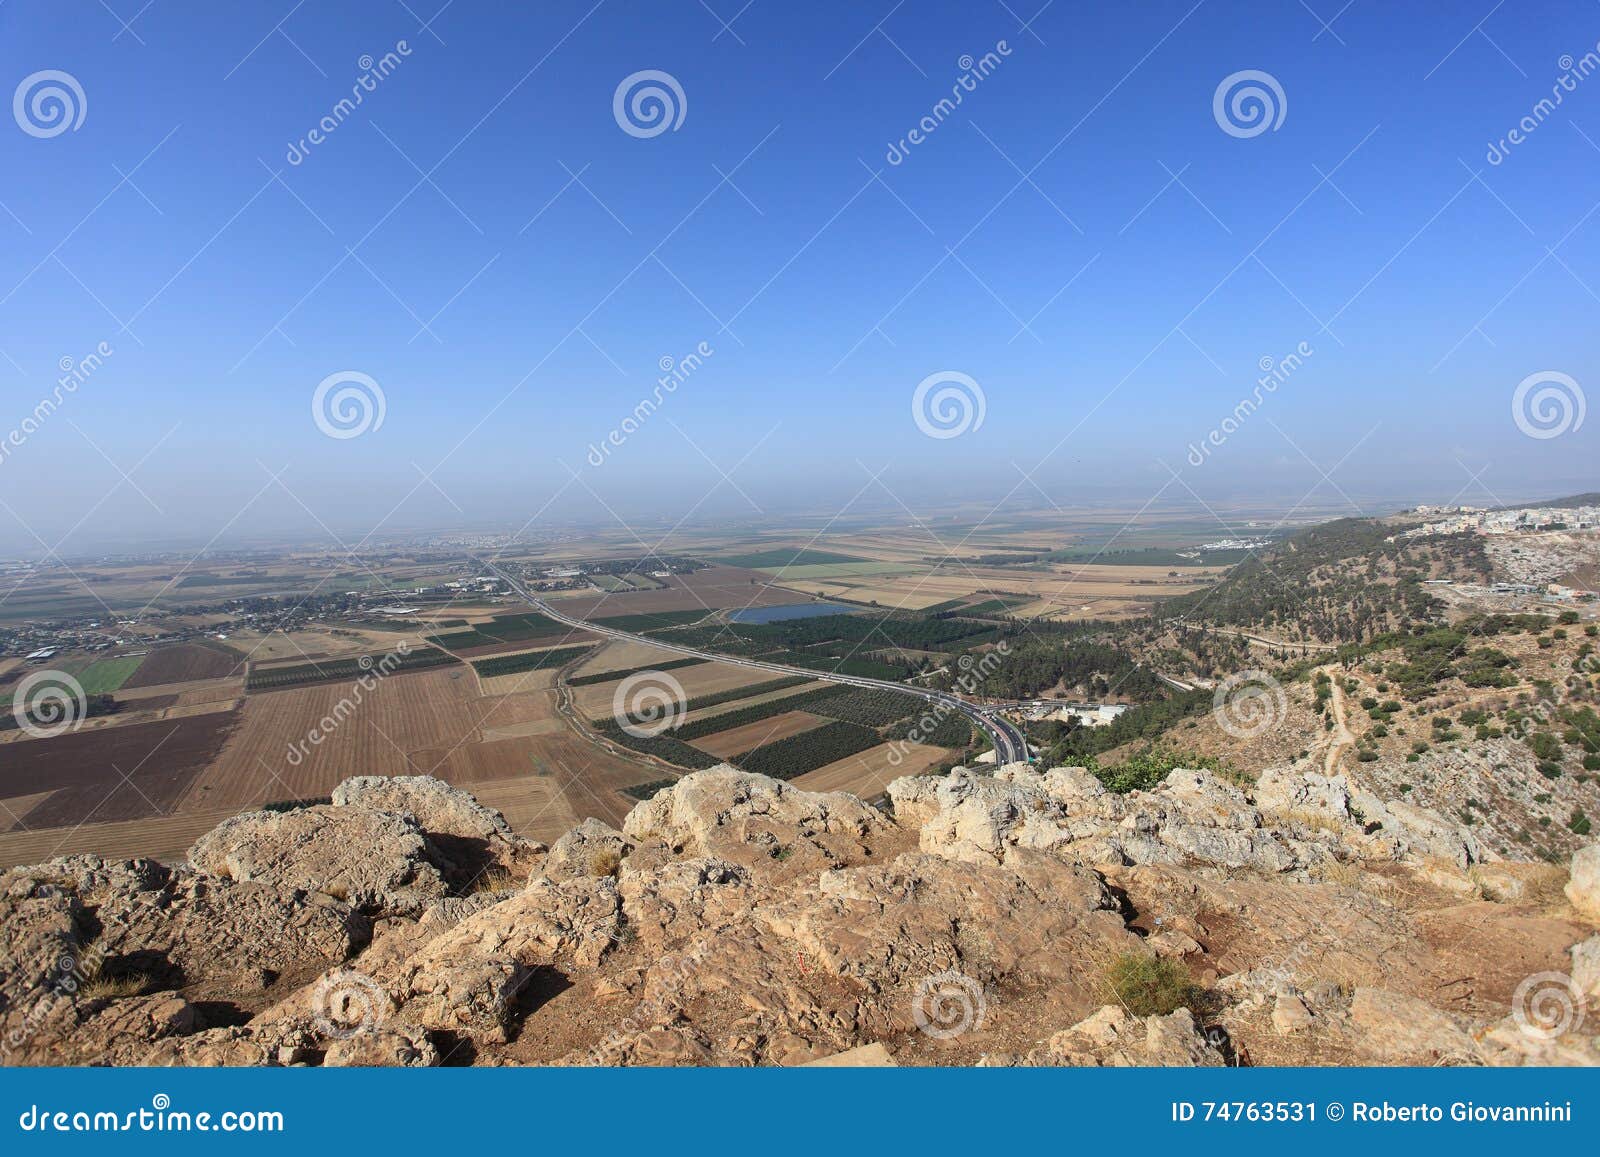 jezreel valley from mount precipice, israel